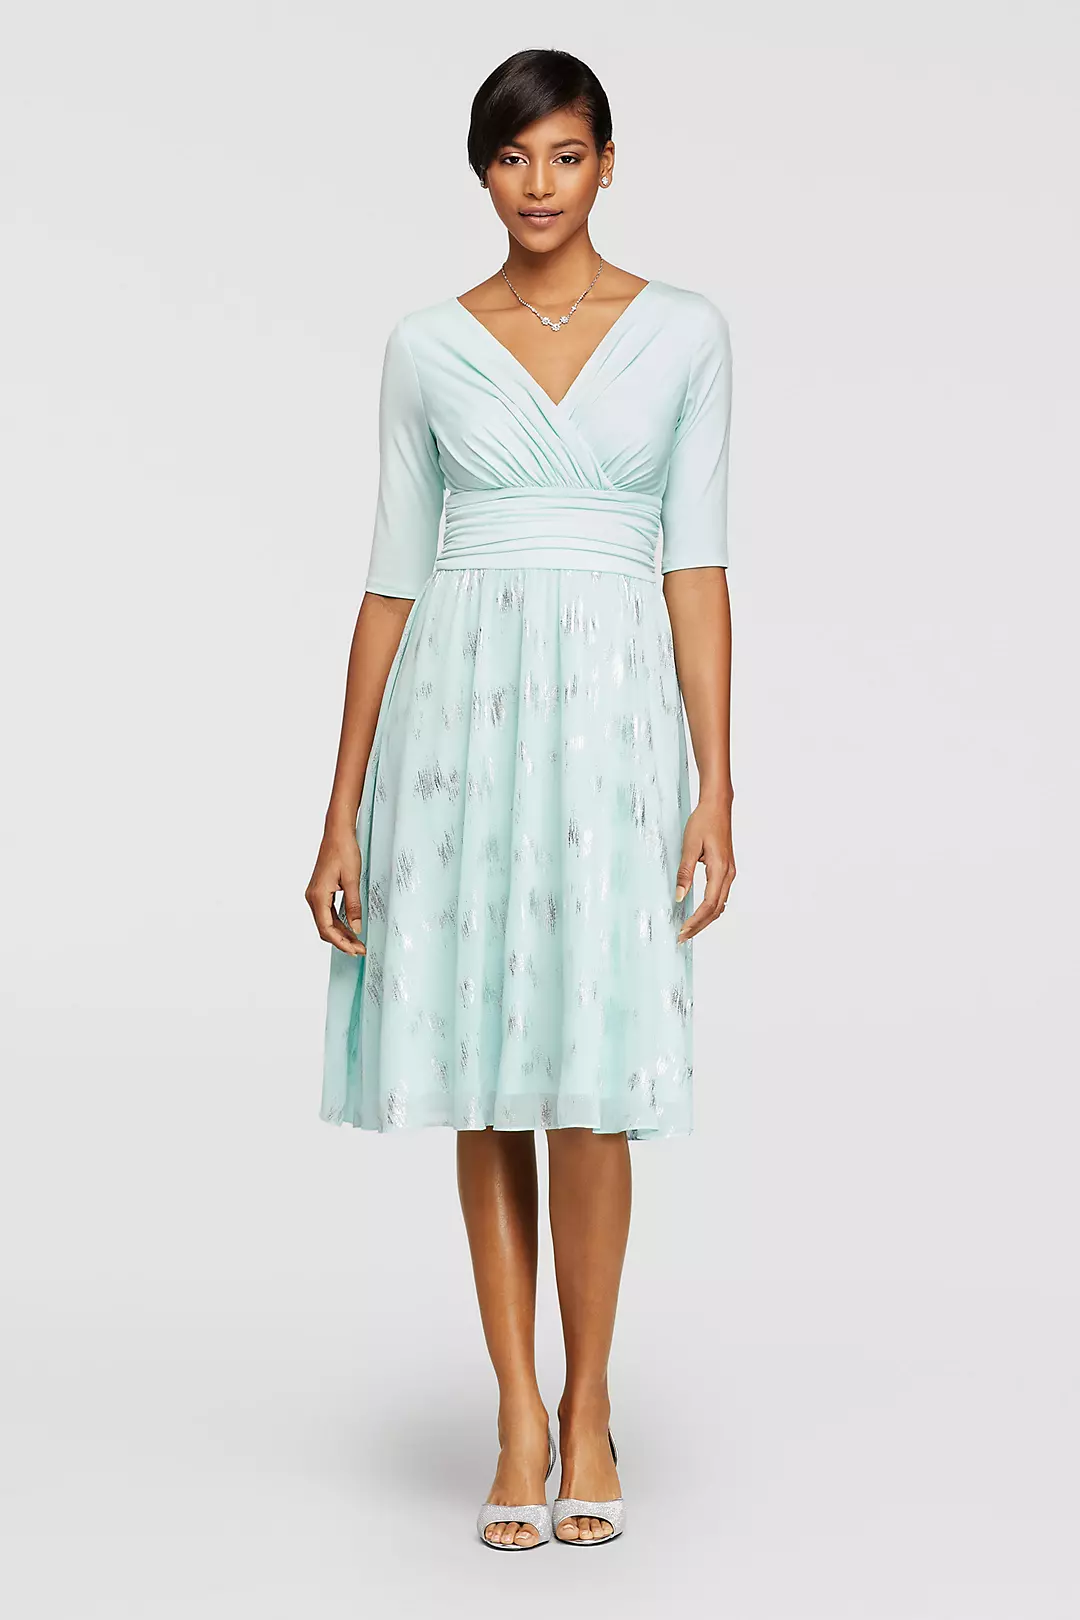 3/4 Sleeved Short Dress with Patterned Skirt Image